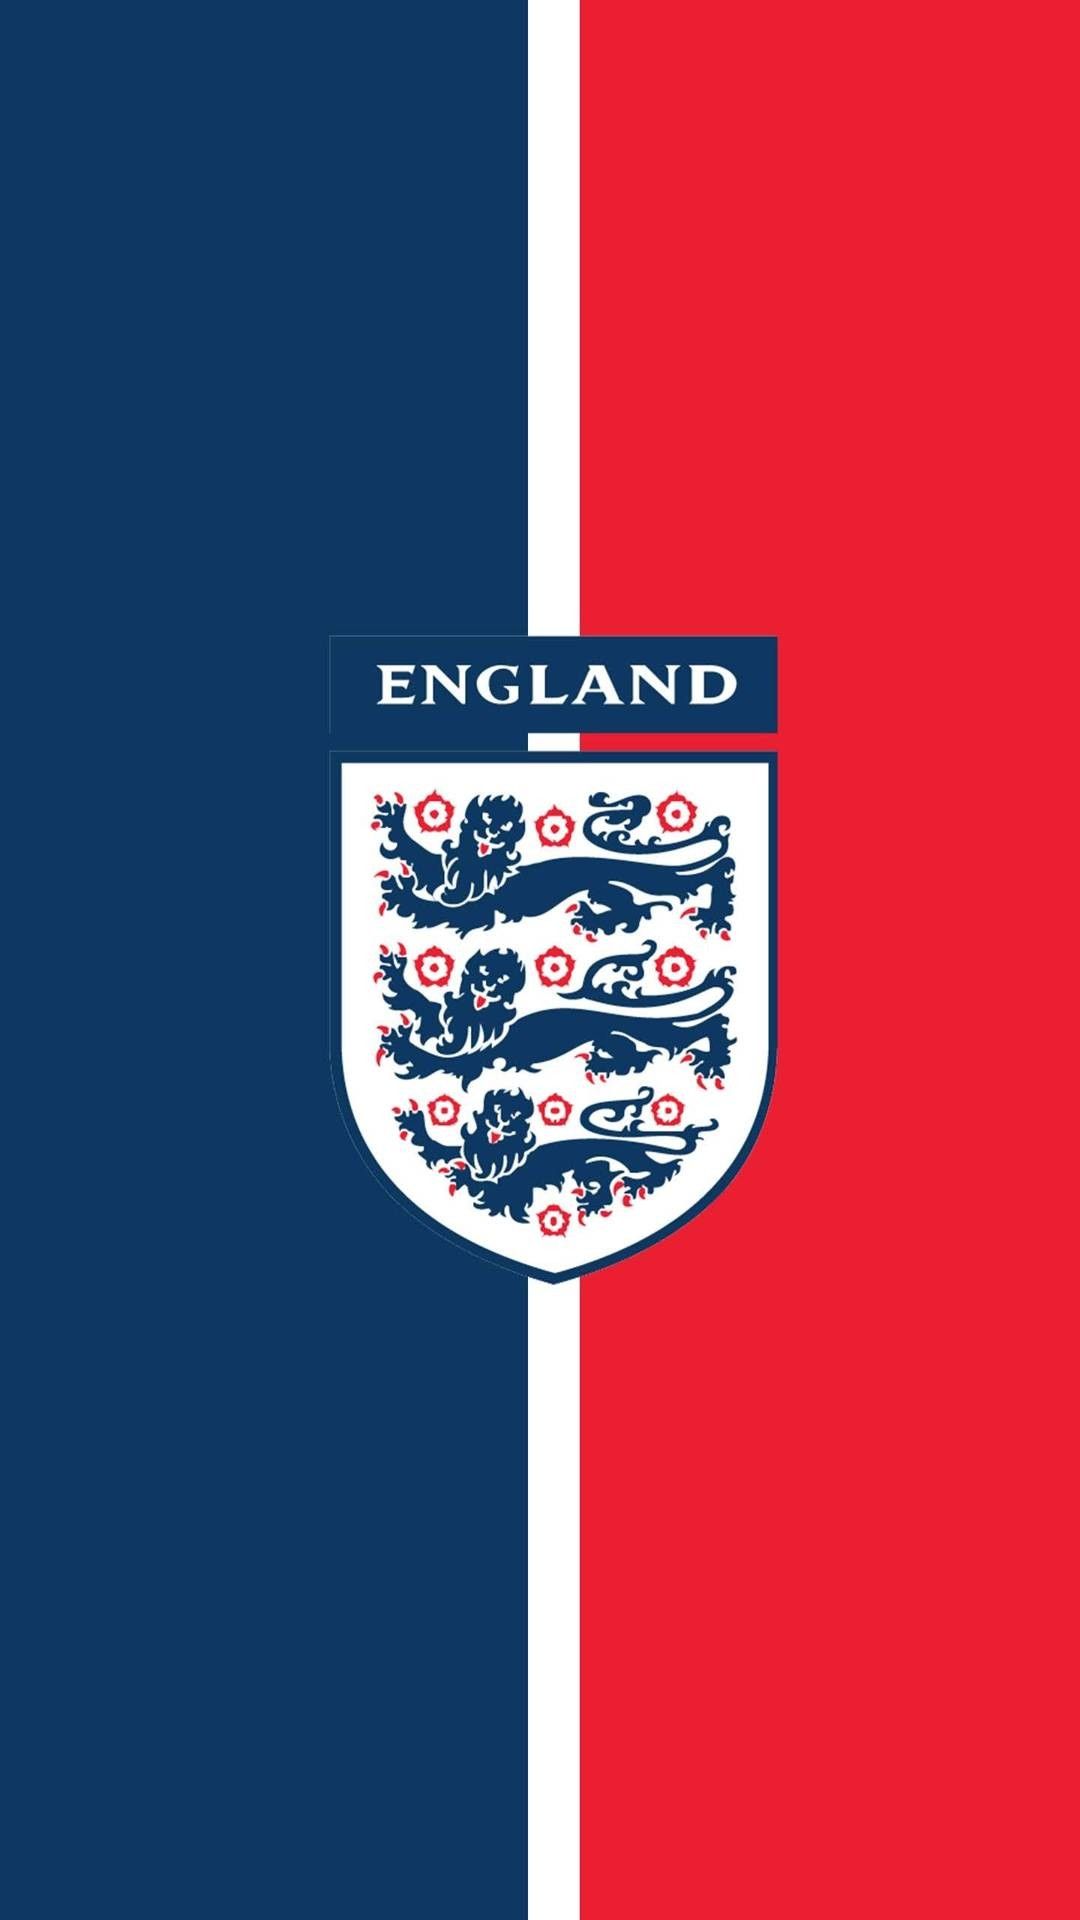 England wallpaper. Team wallpaper, England football team, England flag wallpaper